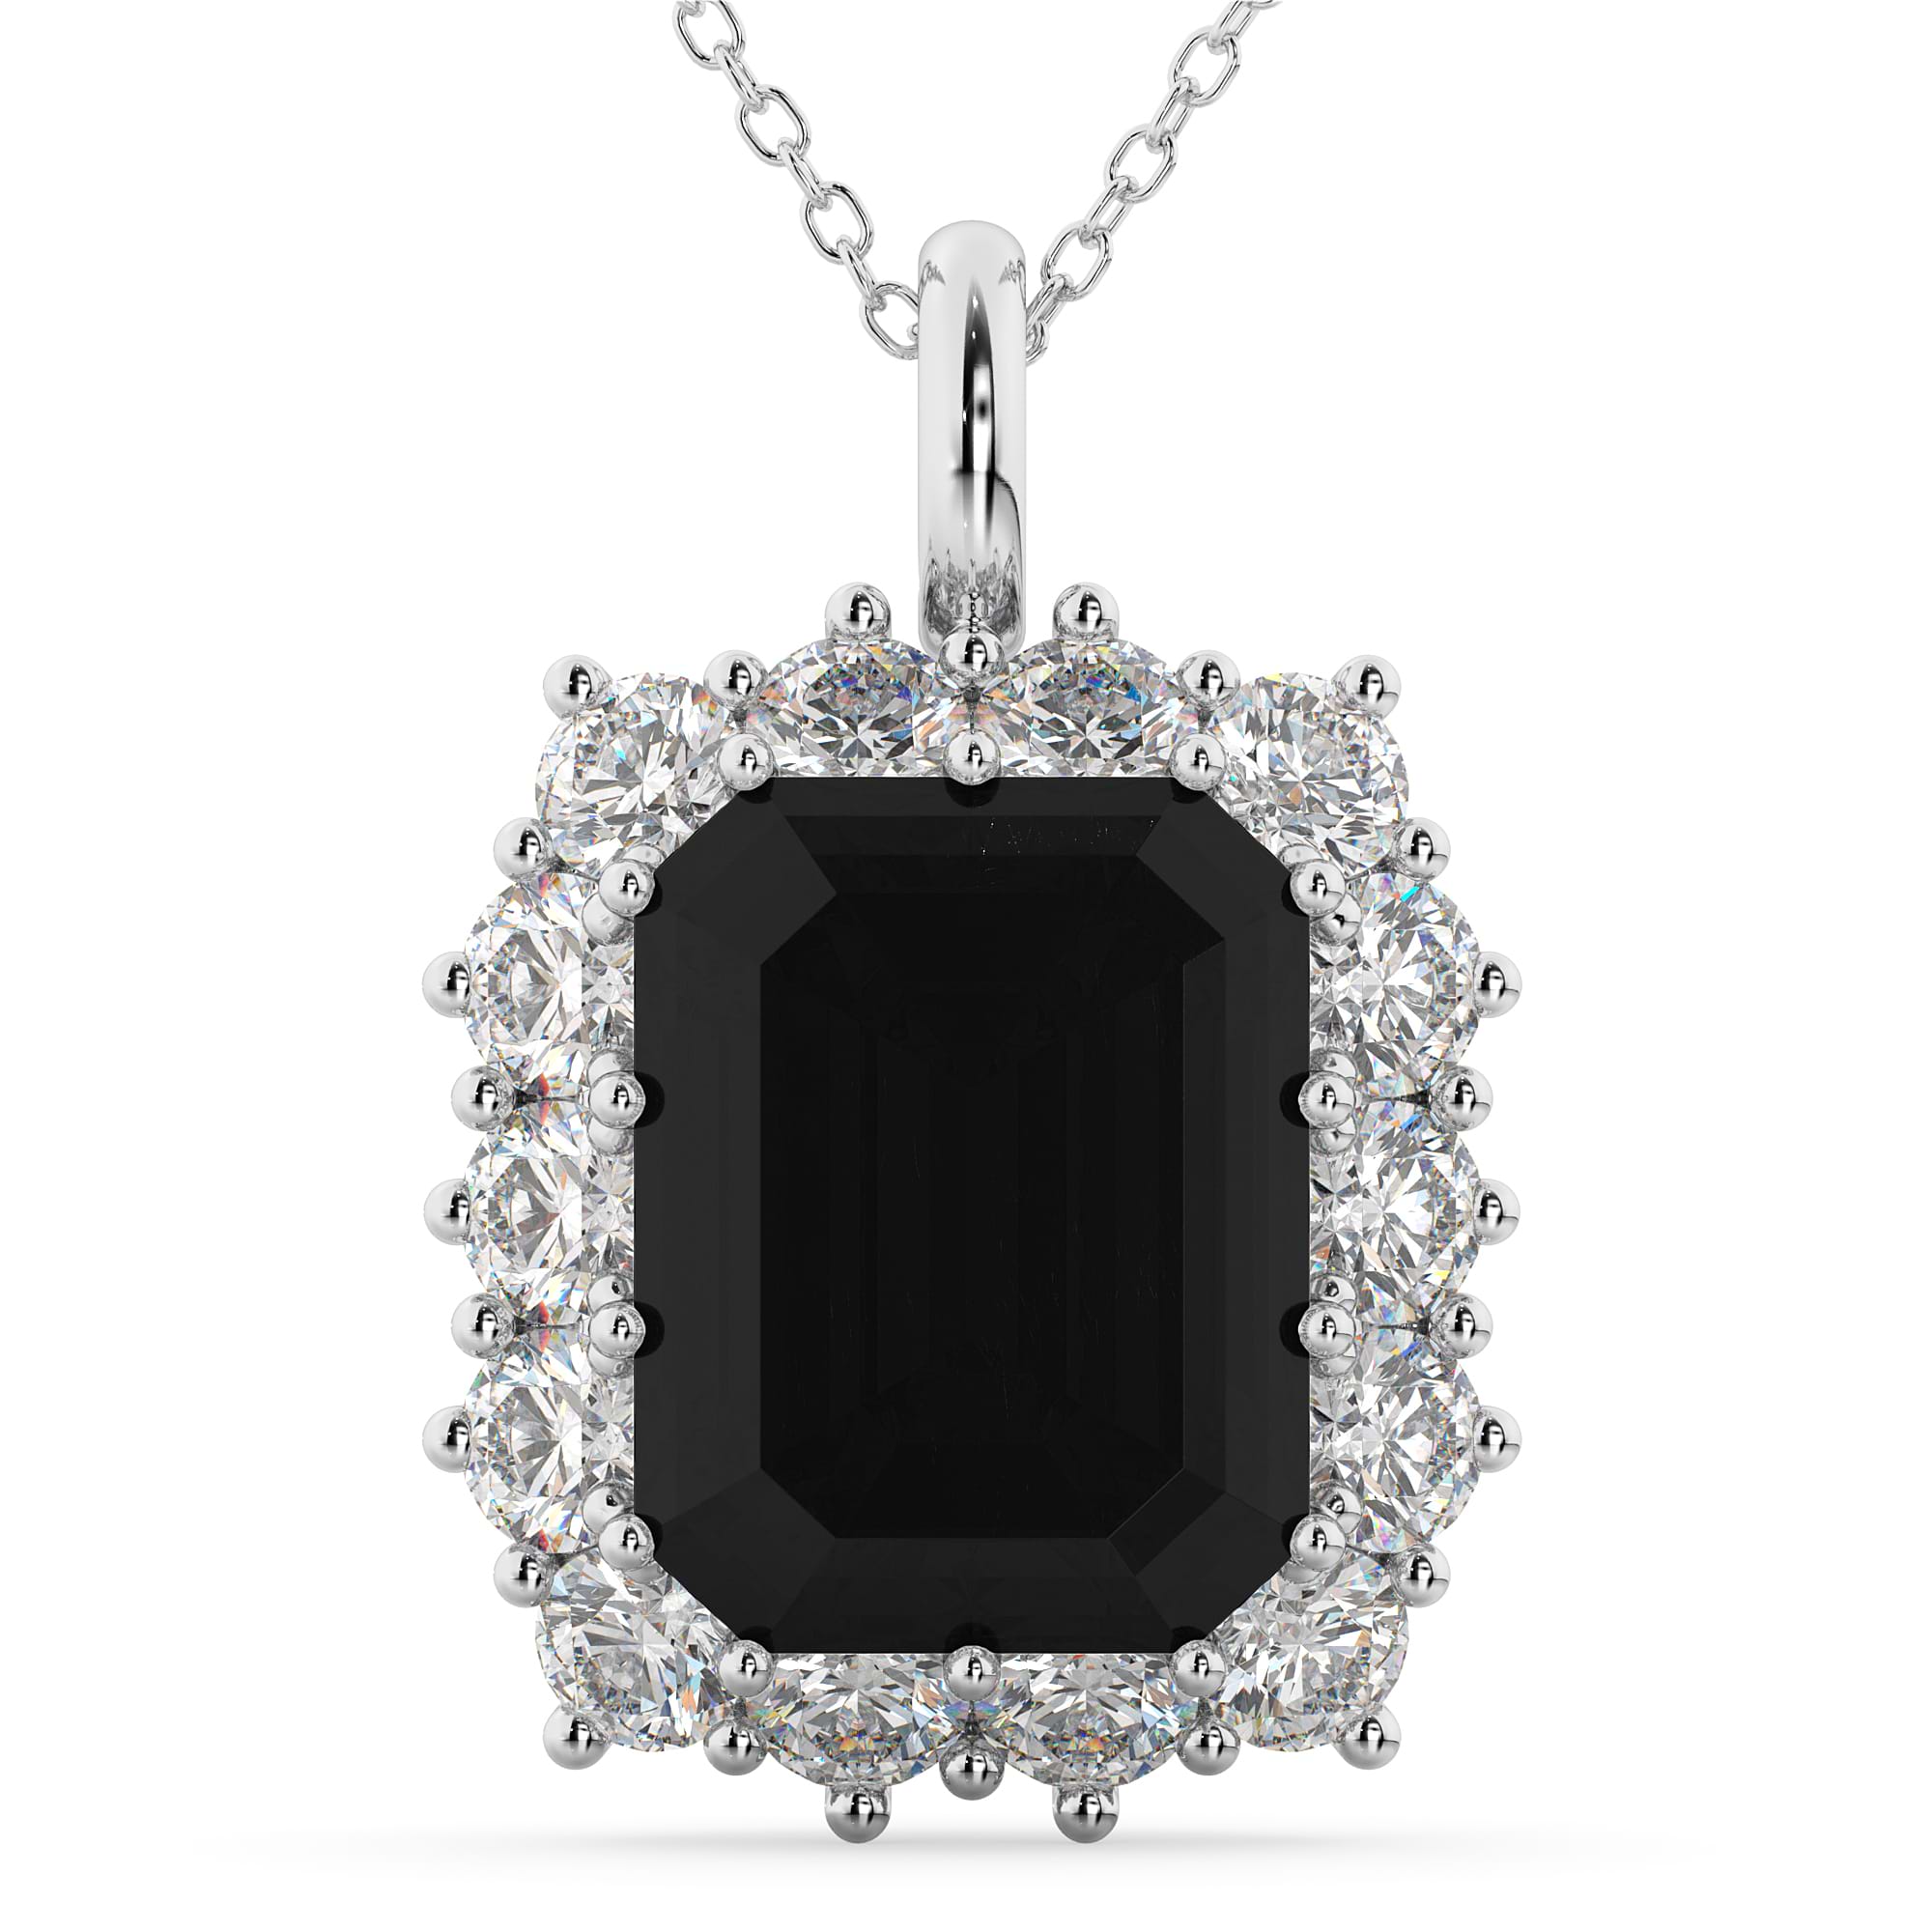 Emerald Cut Black Diamond & Diamond Pendant 14k White Gold (5.68ct)